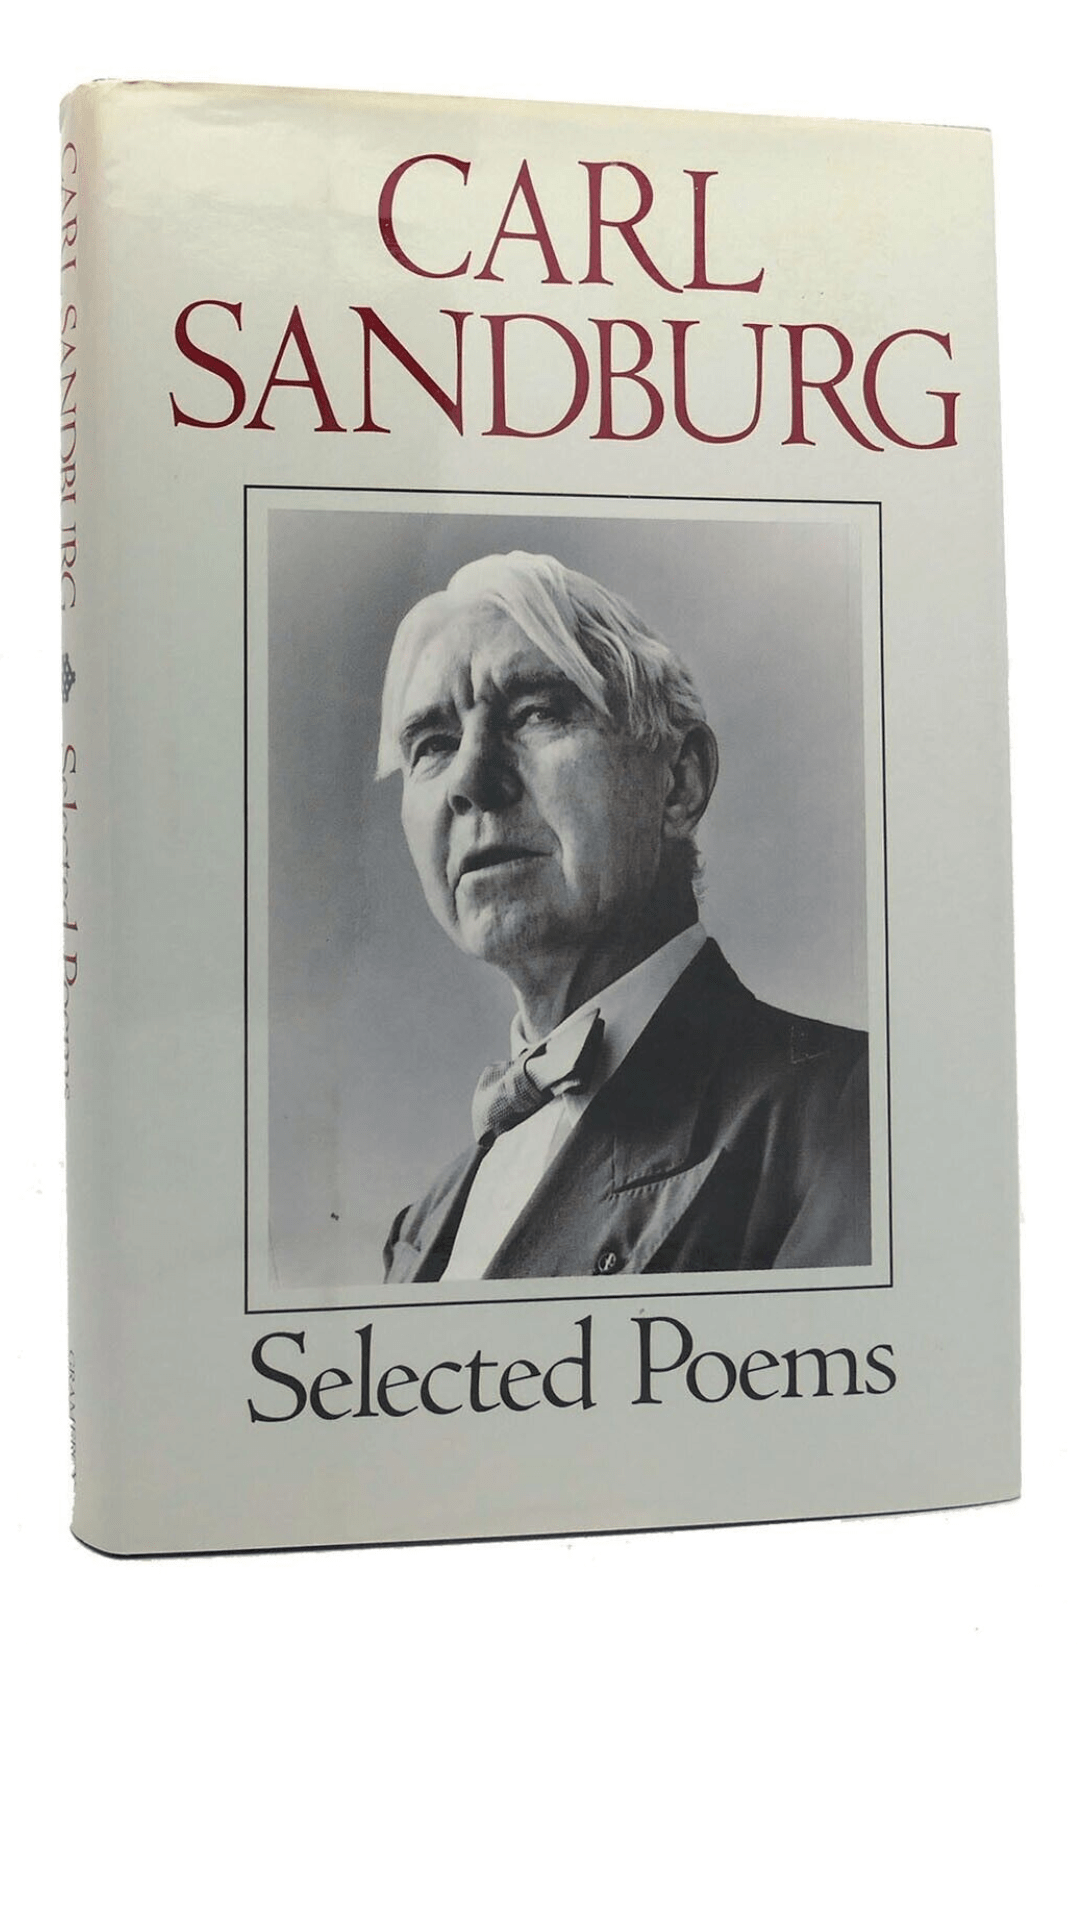 Selected Poems of Carl Sandburg